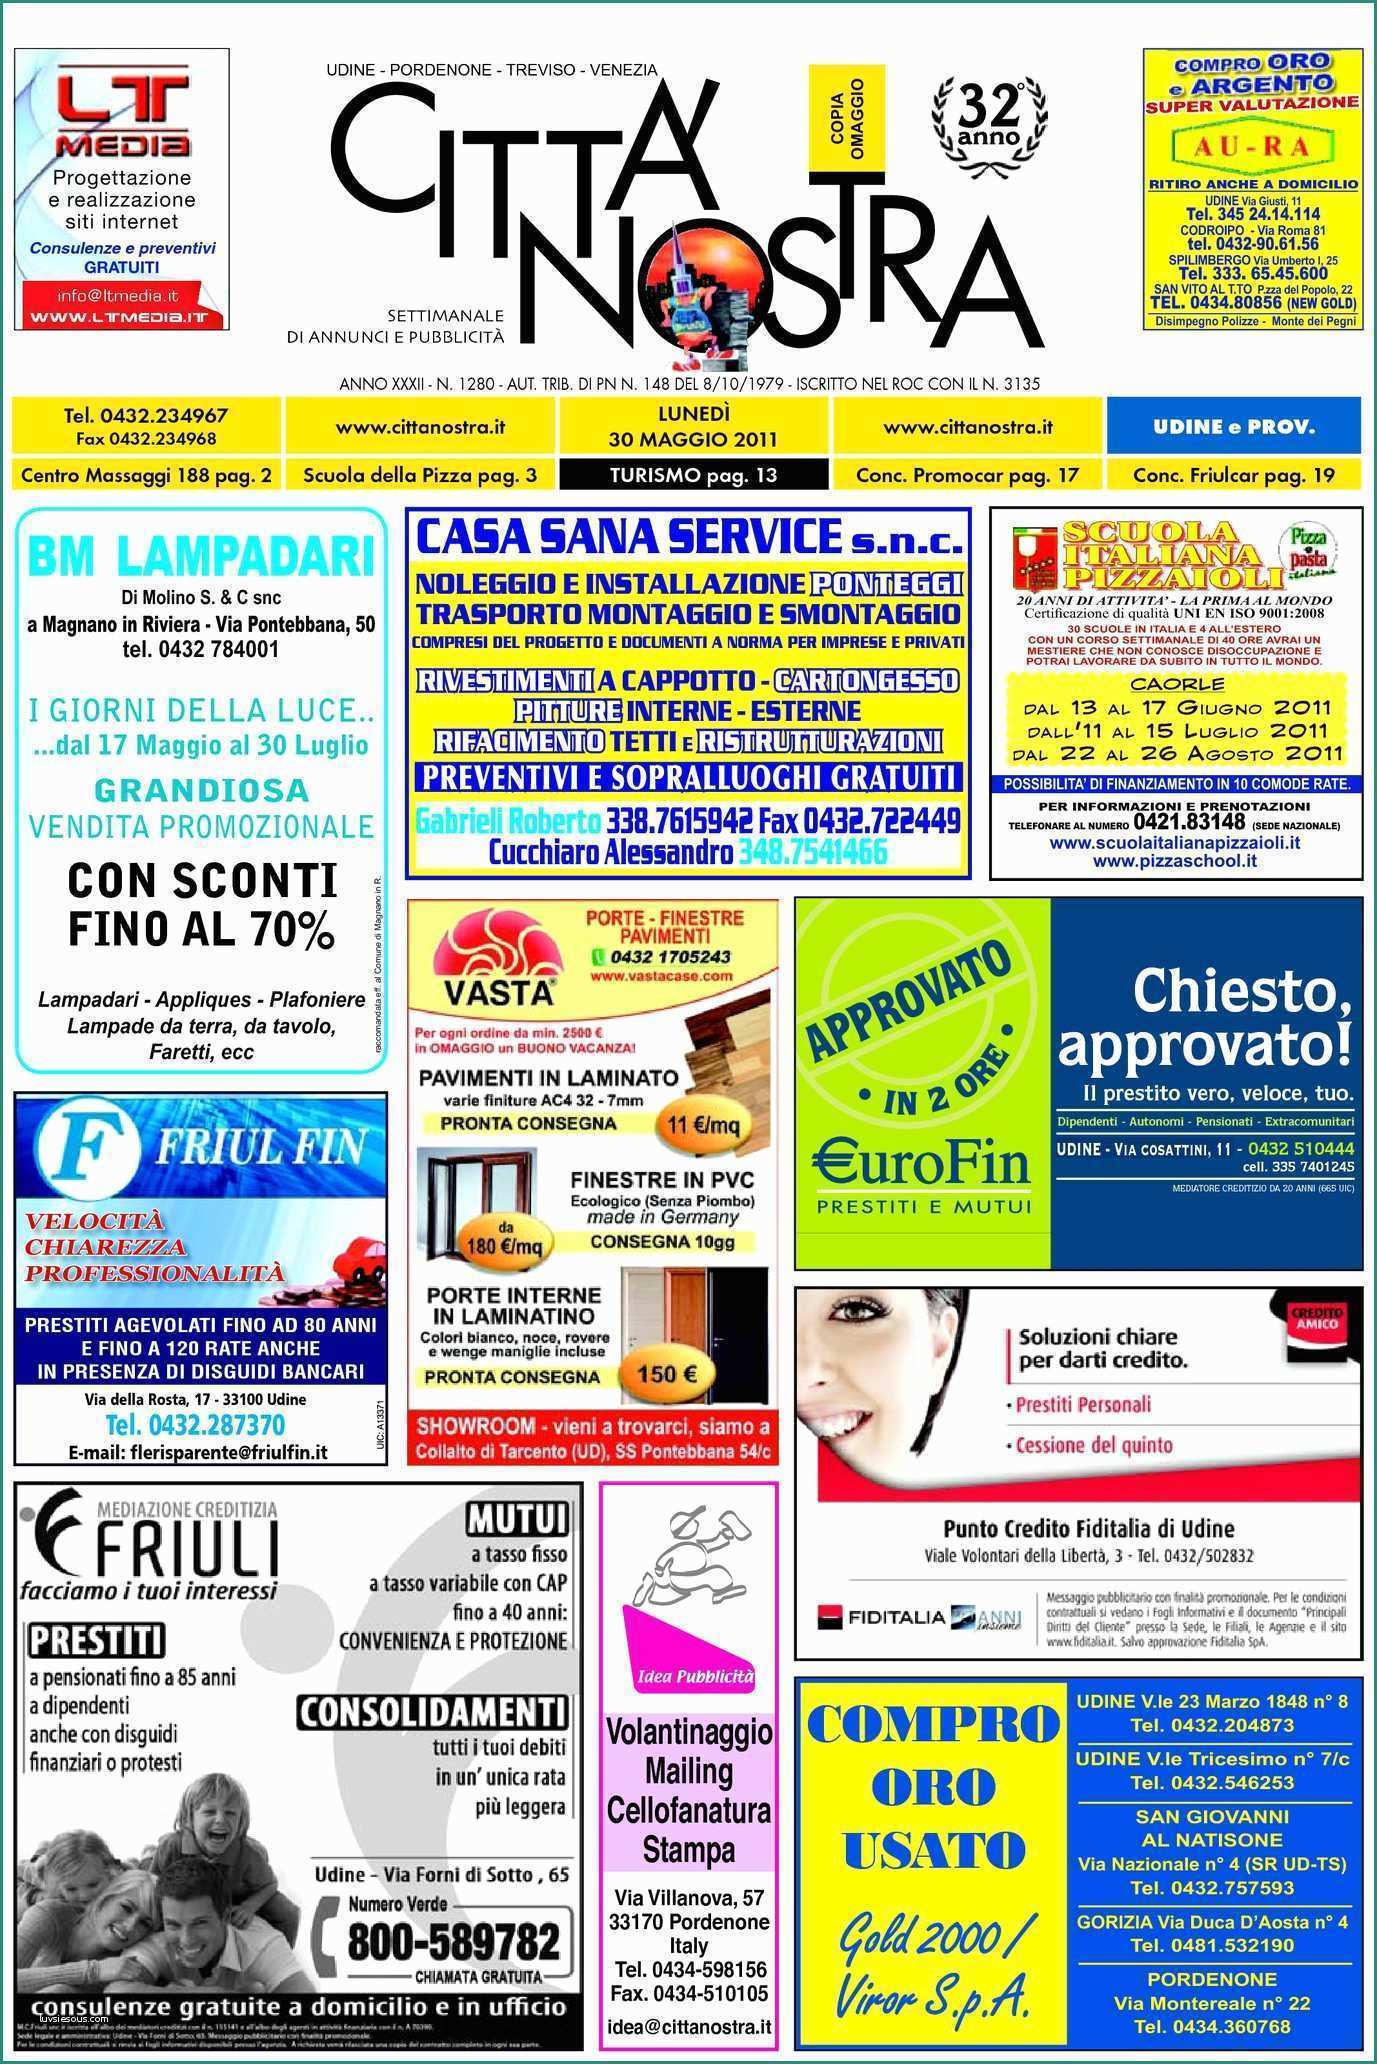 Ascensori Per Disabili Dimensioni E Calaméo Citt  Nostra Udine Del 30 05 2011 N 1280